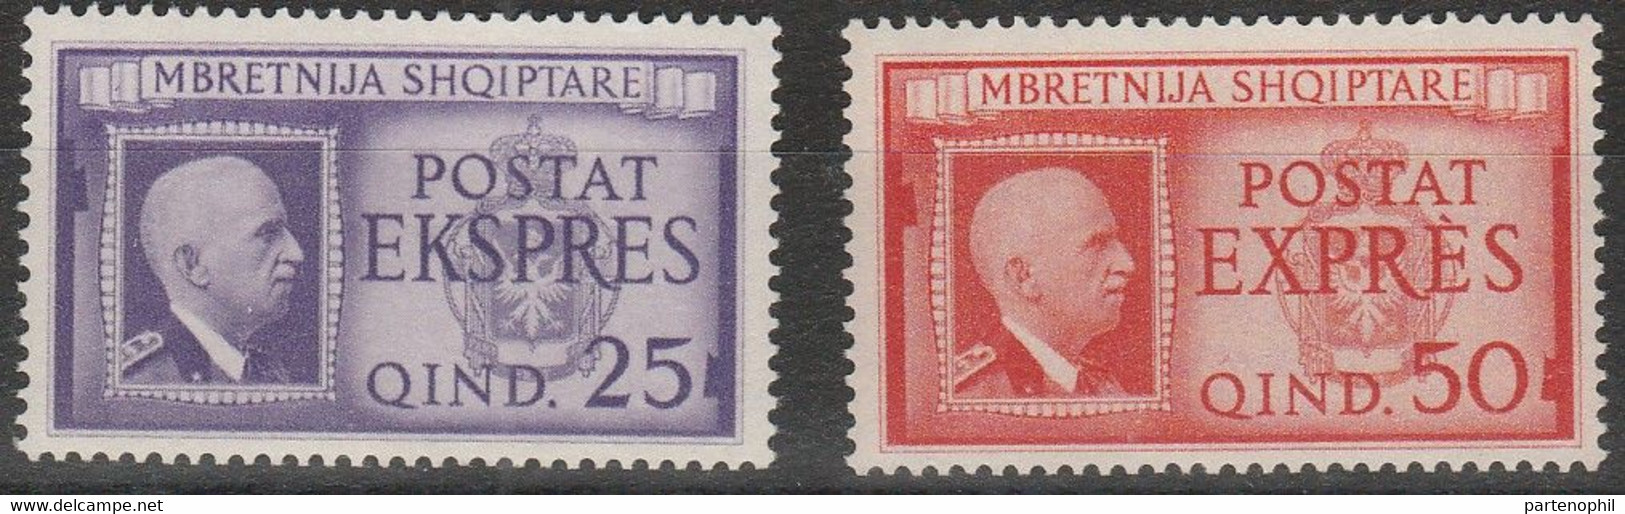 281 Occupazione Italiana Albania  Espressi - 1940 - Vittorio Emanuele II N. 1/2. Cat. € 110,00. SPL MNH - Albanië